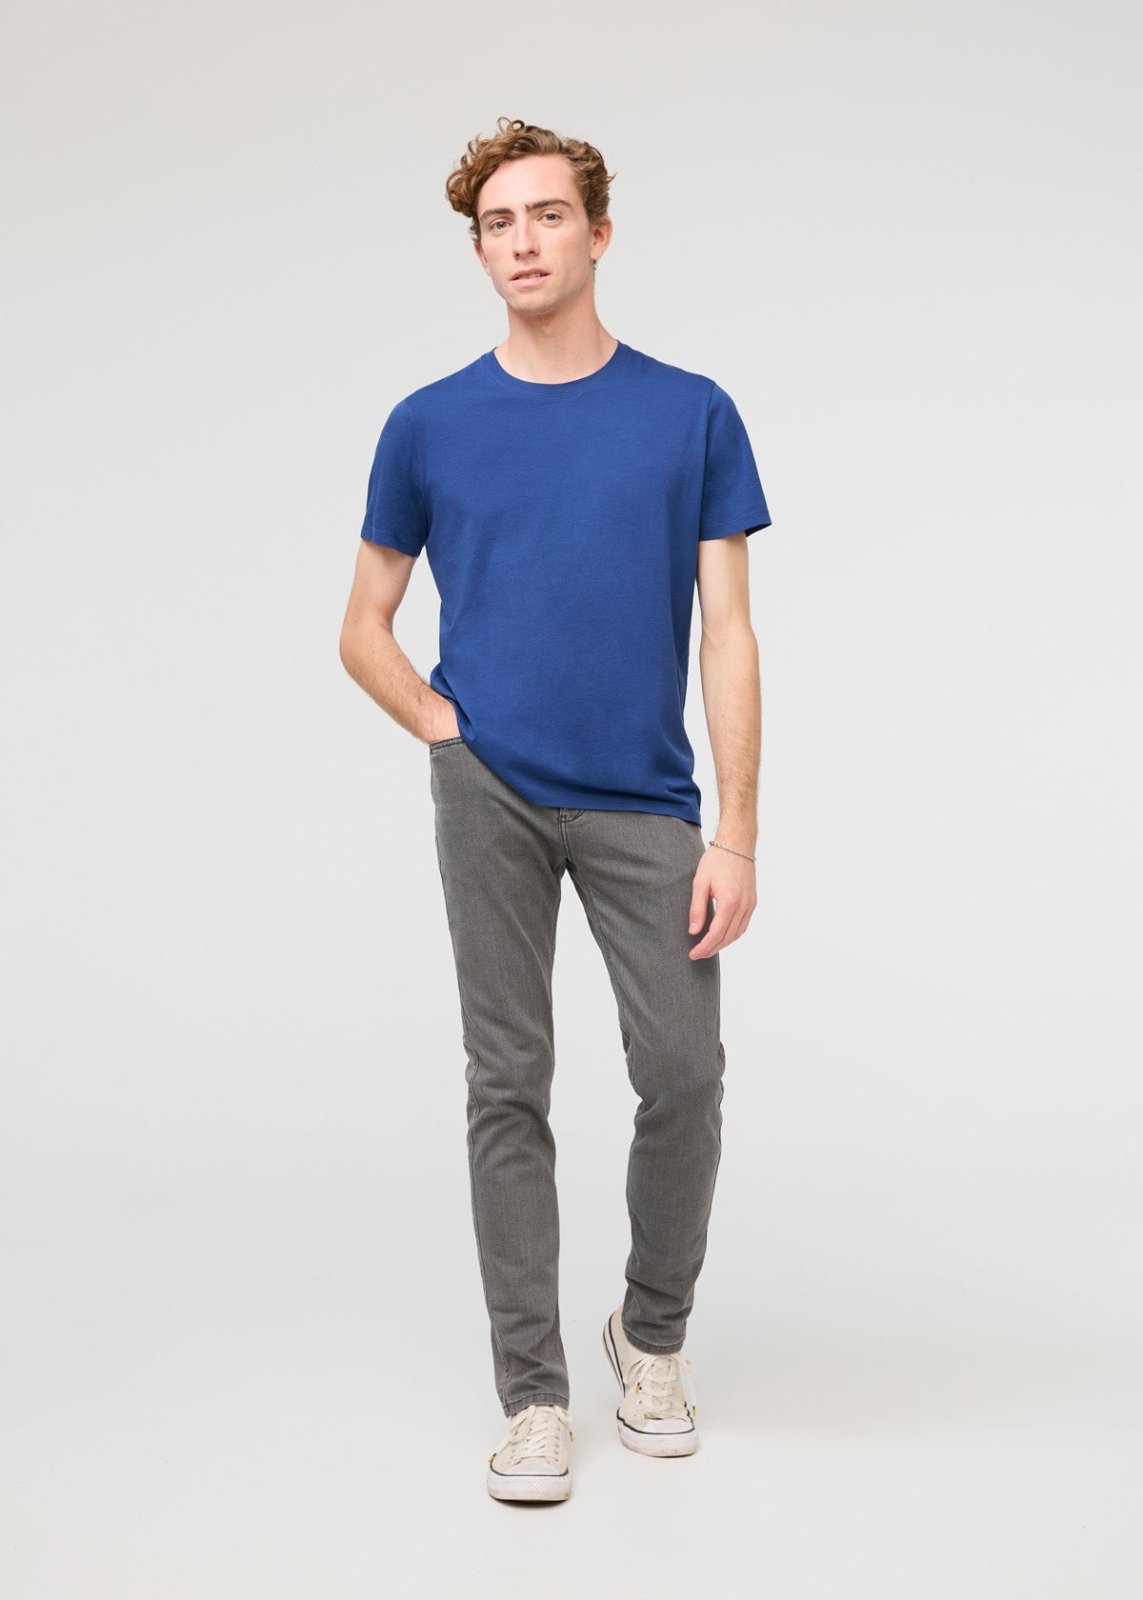 mens 100% pima cotton blue t-shirt full body